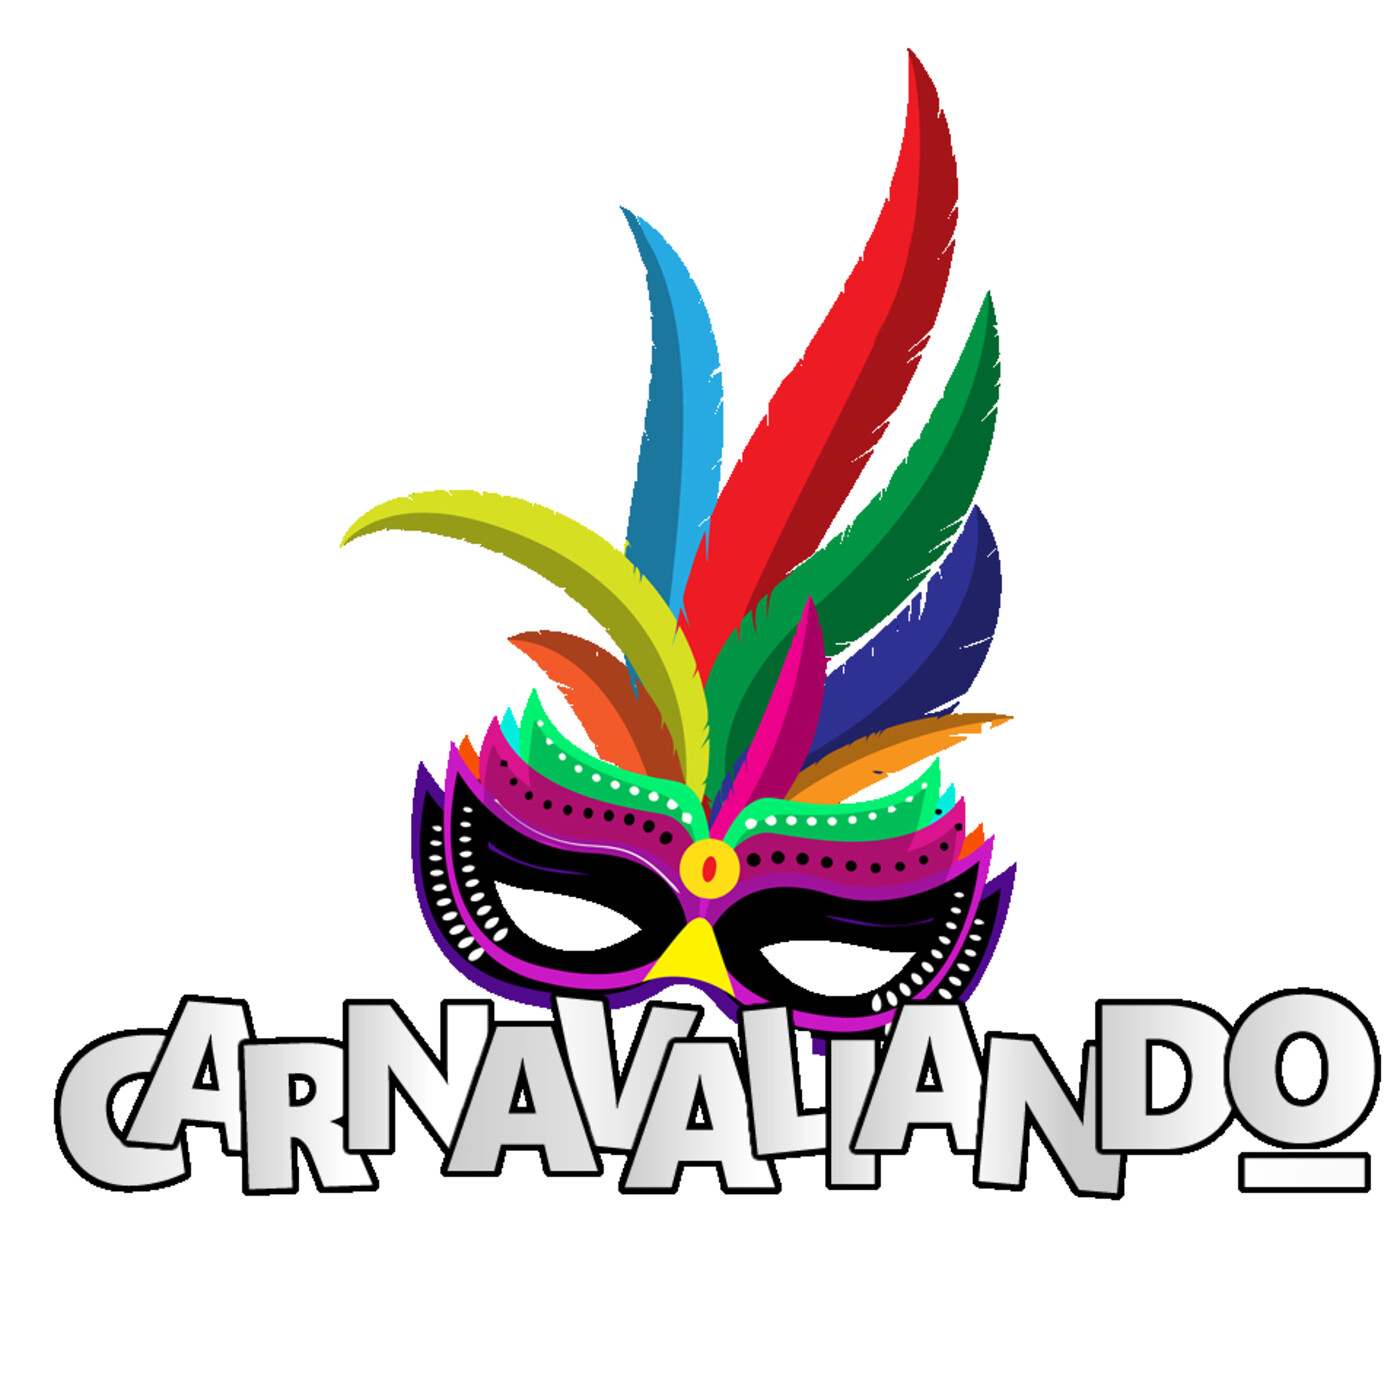 Carnavaliando